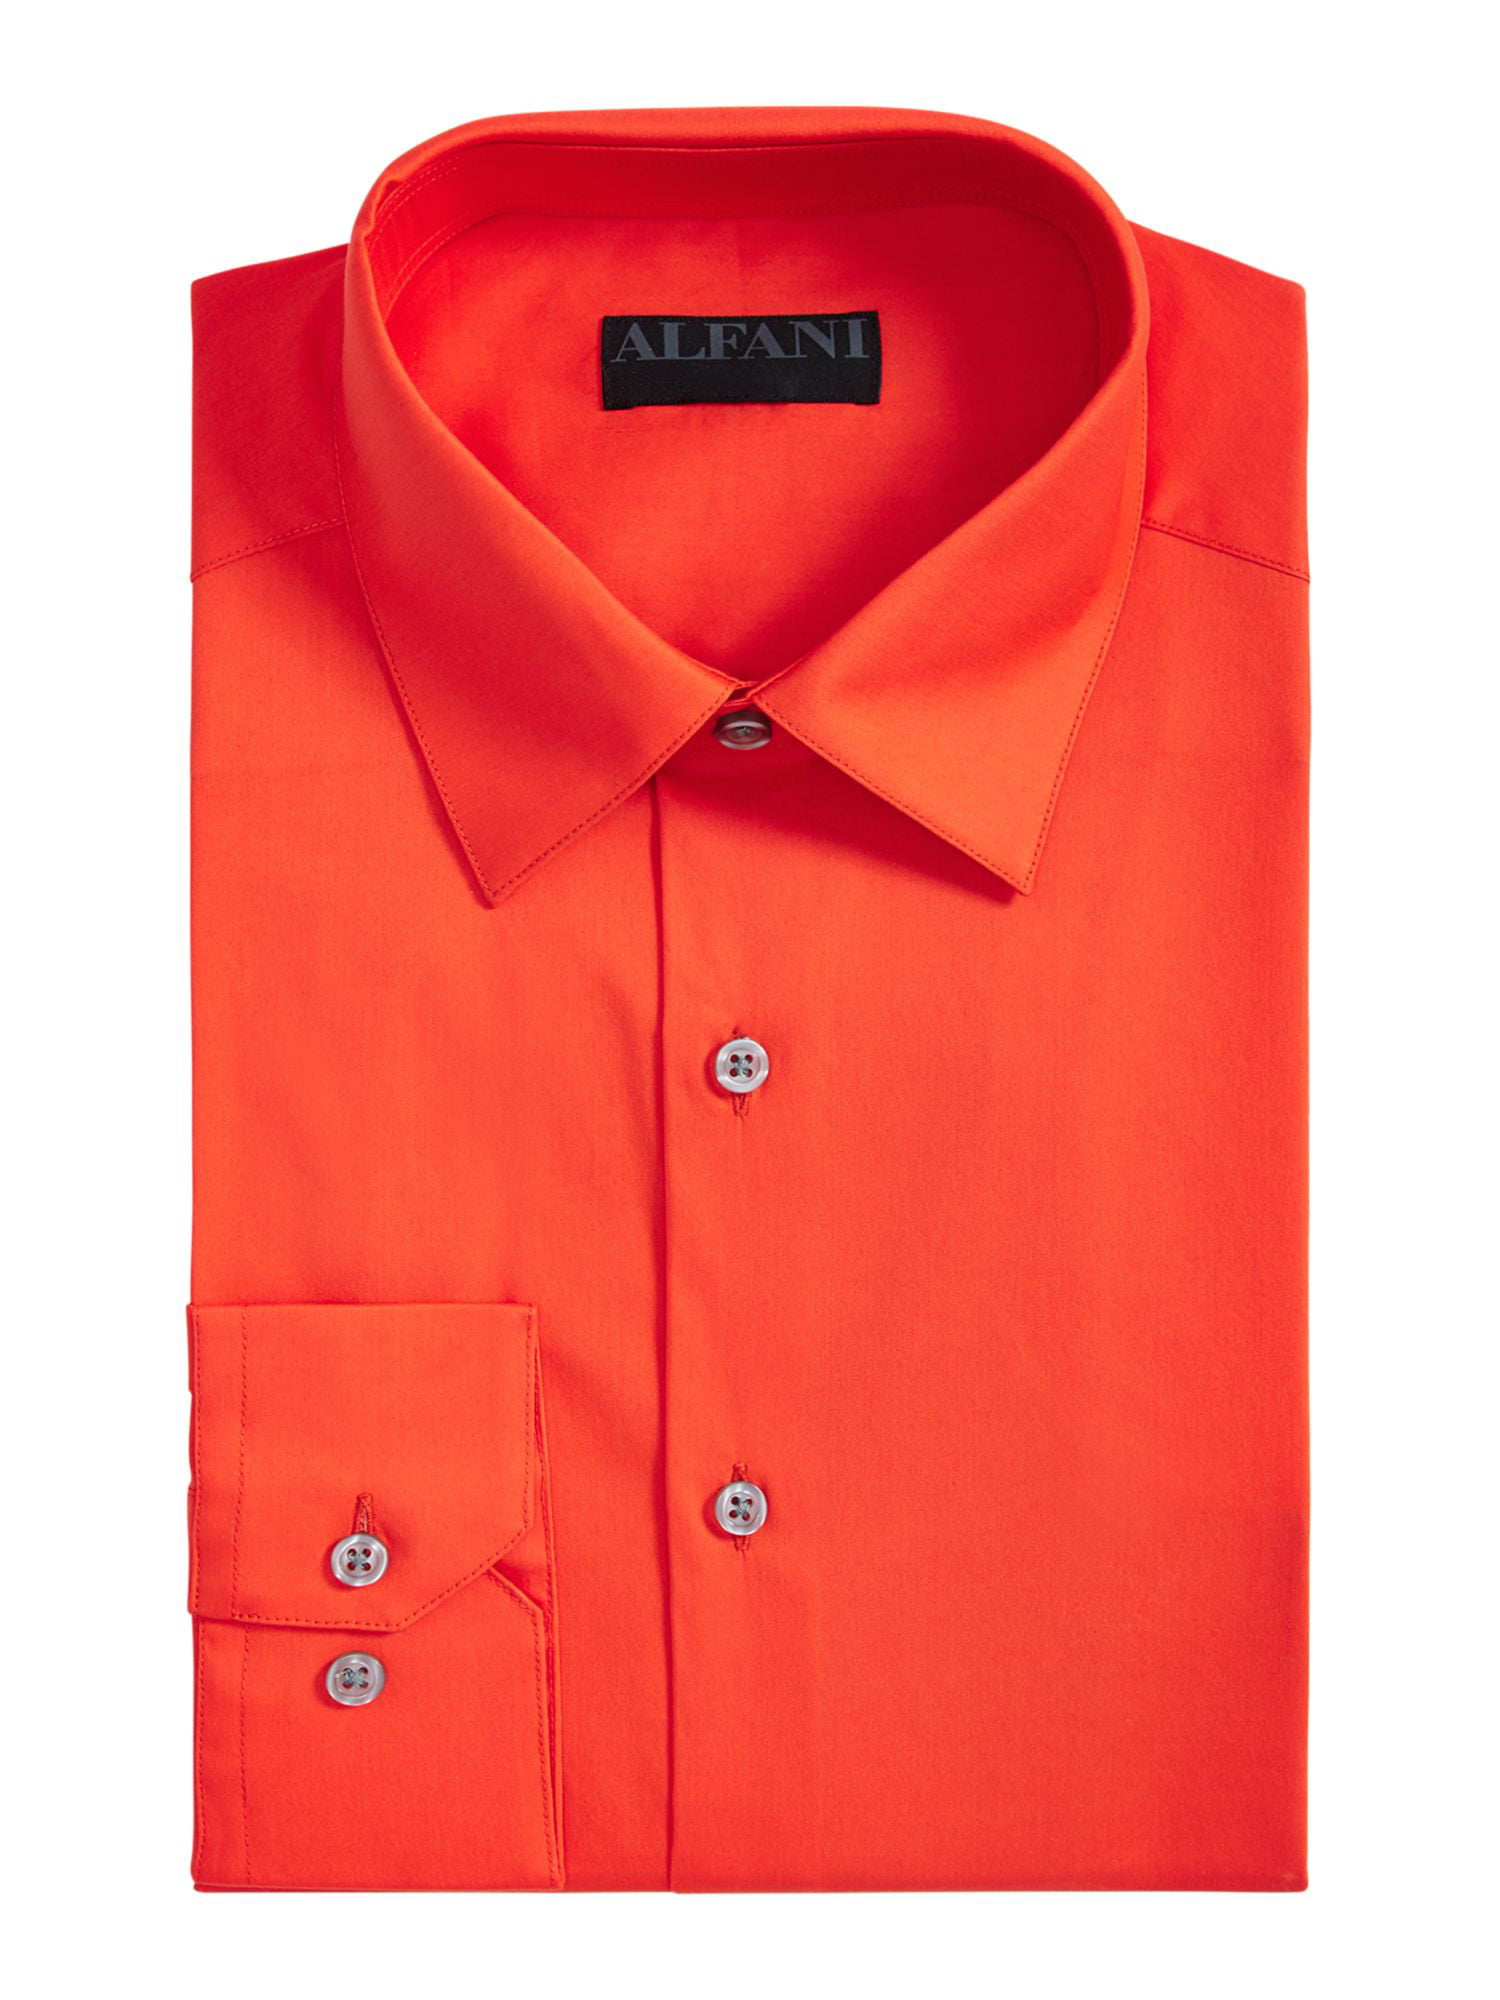 Bar III Slim Fit Plaid Dress Shirt Orange Blue 14/14.5 32/33 Mens New 